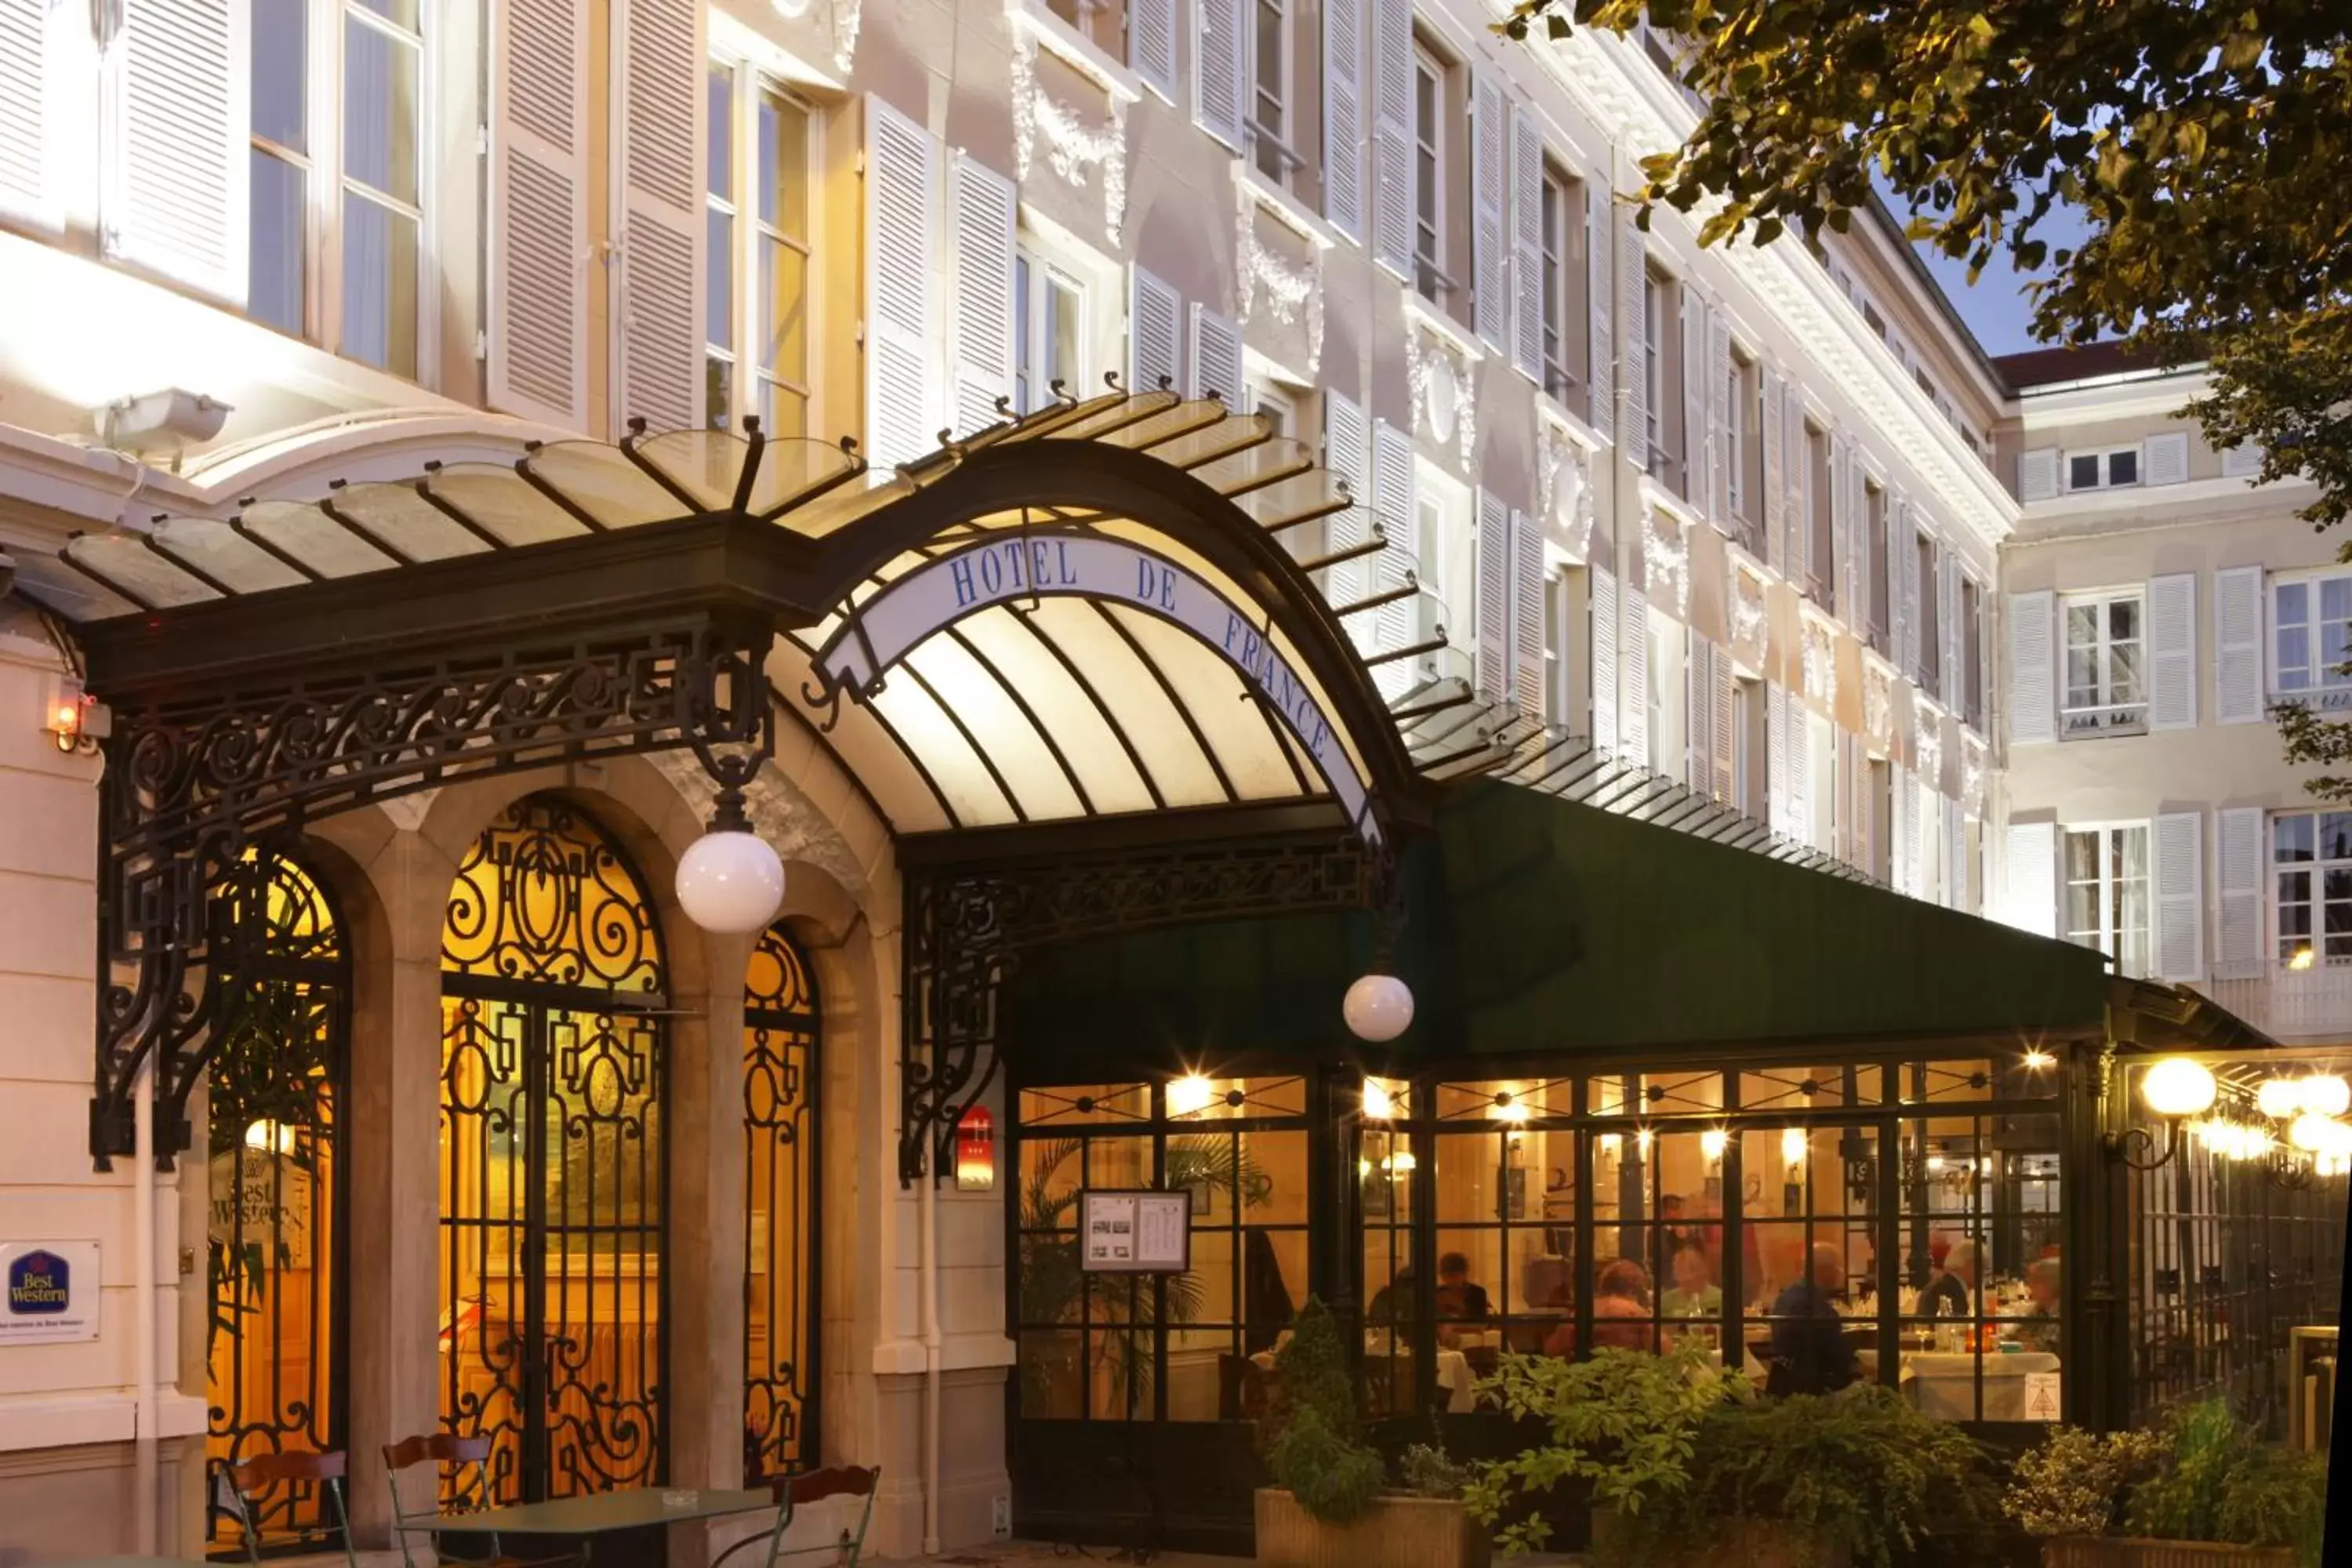 Facade/entrance in Best Western Hôtel de France